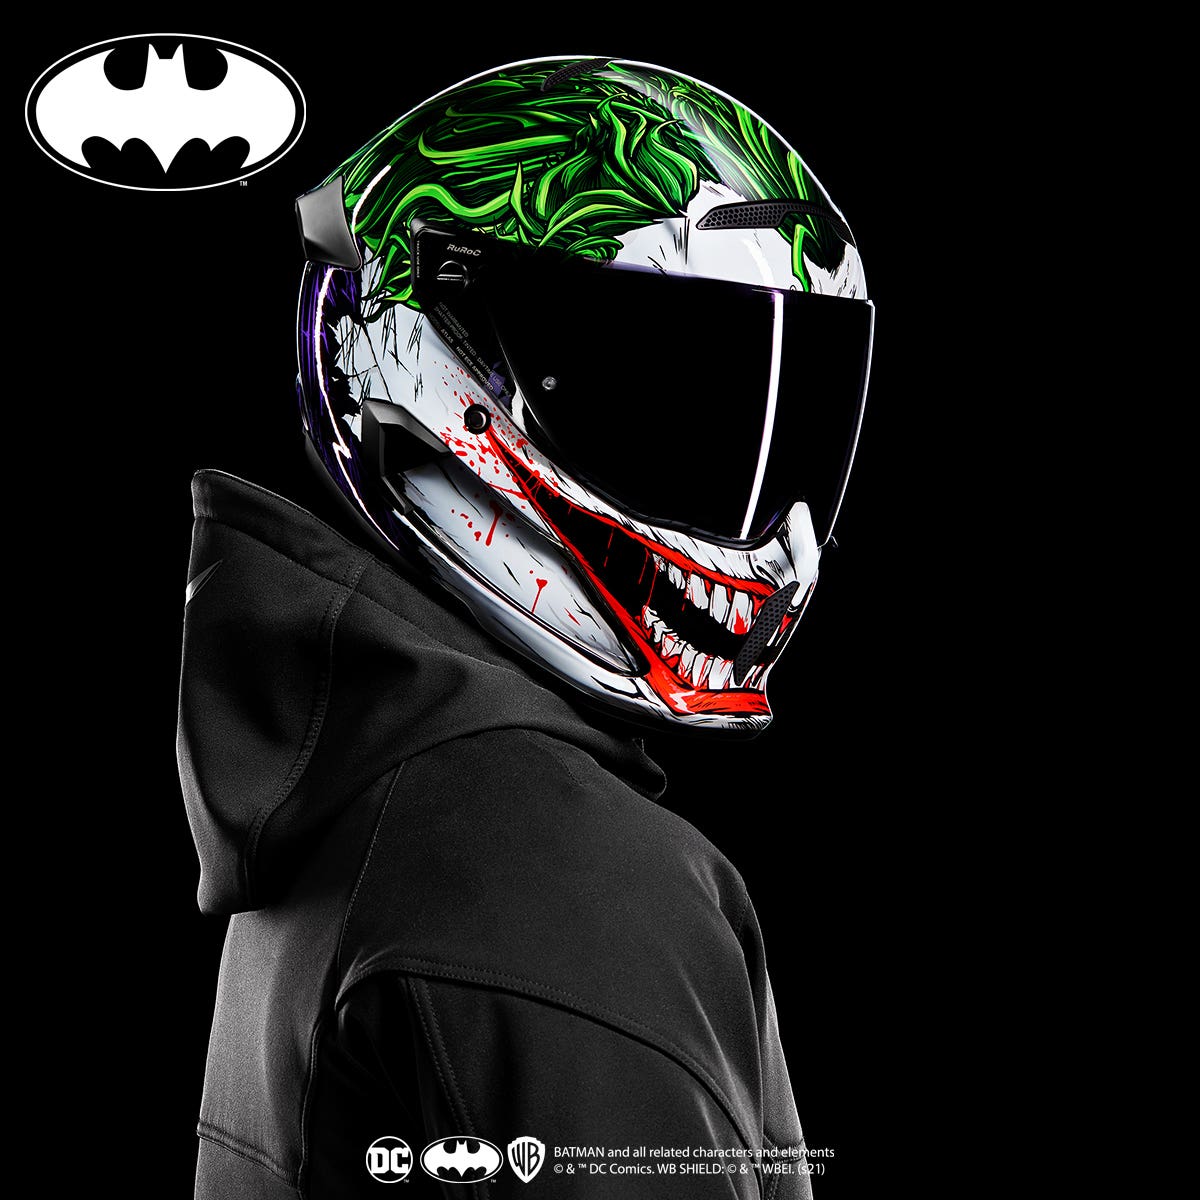 Ruroc | Atlas 3.0 The Joker | Full Face Motorcycle Helmet 